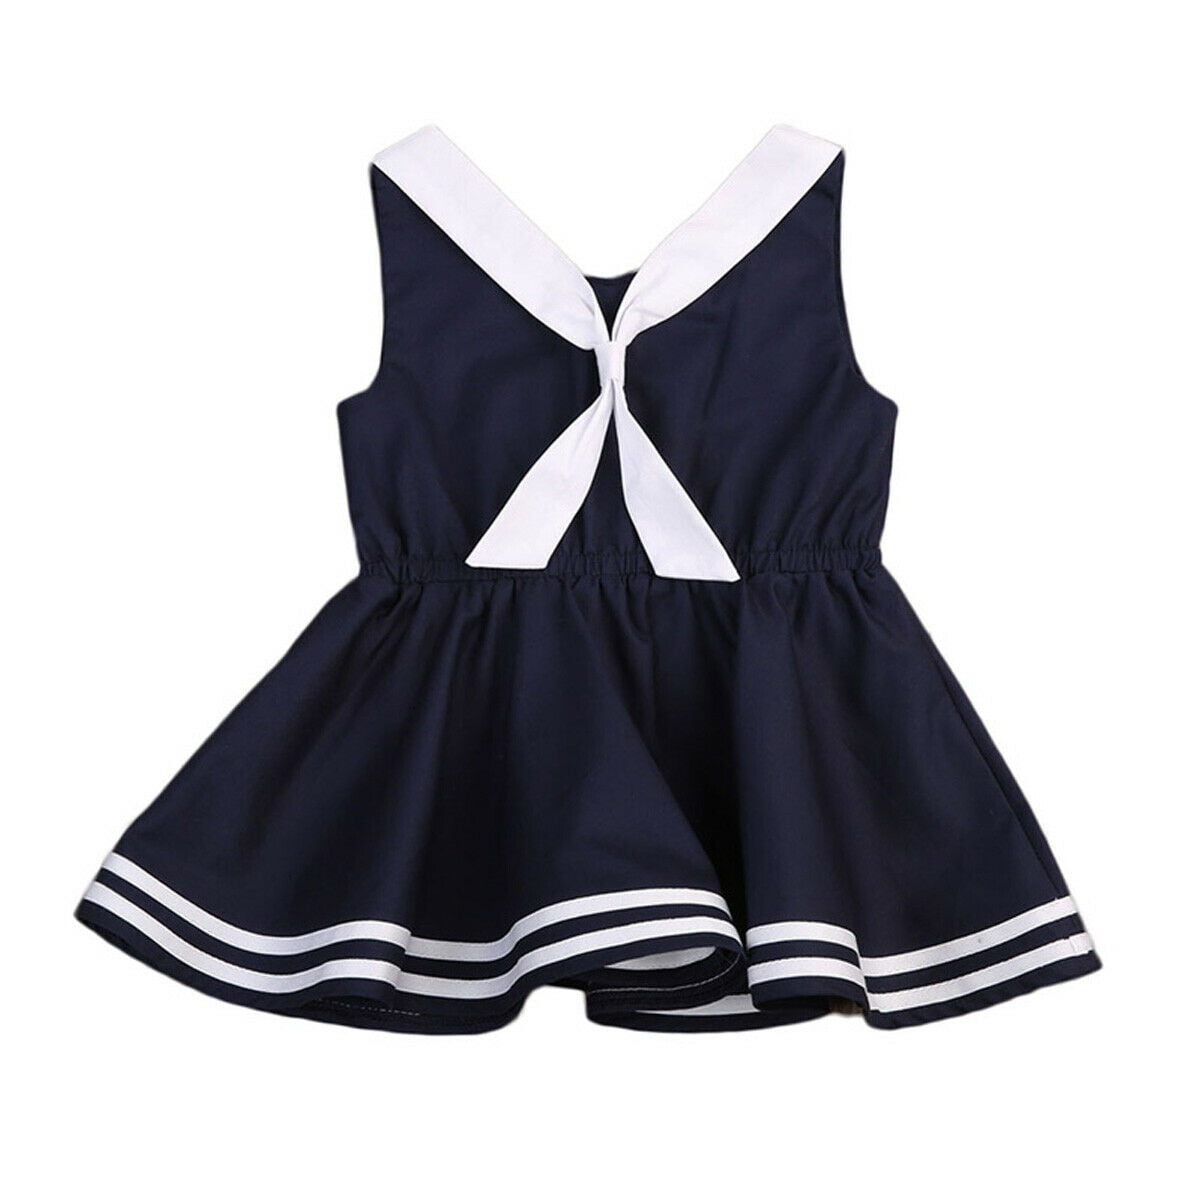 Sailor Style Dress Girl Navy White Summer Dress Suit 3 6 12 24 M 